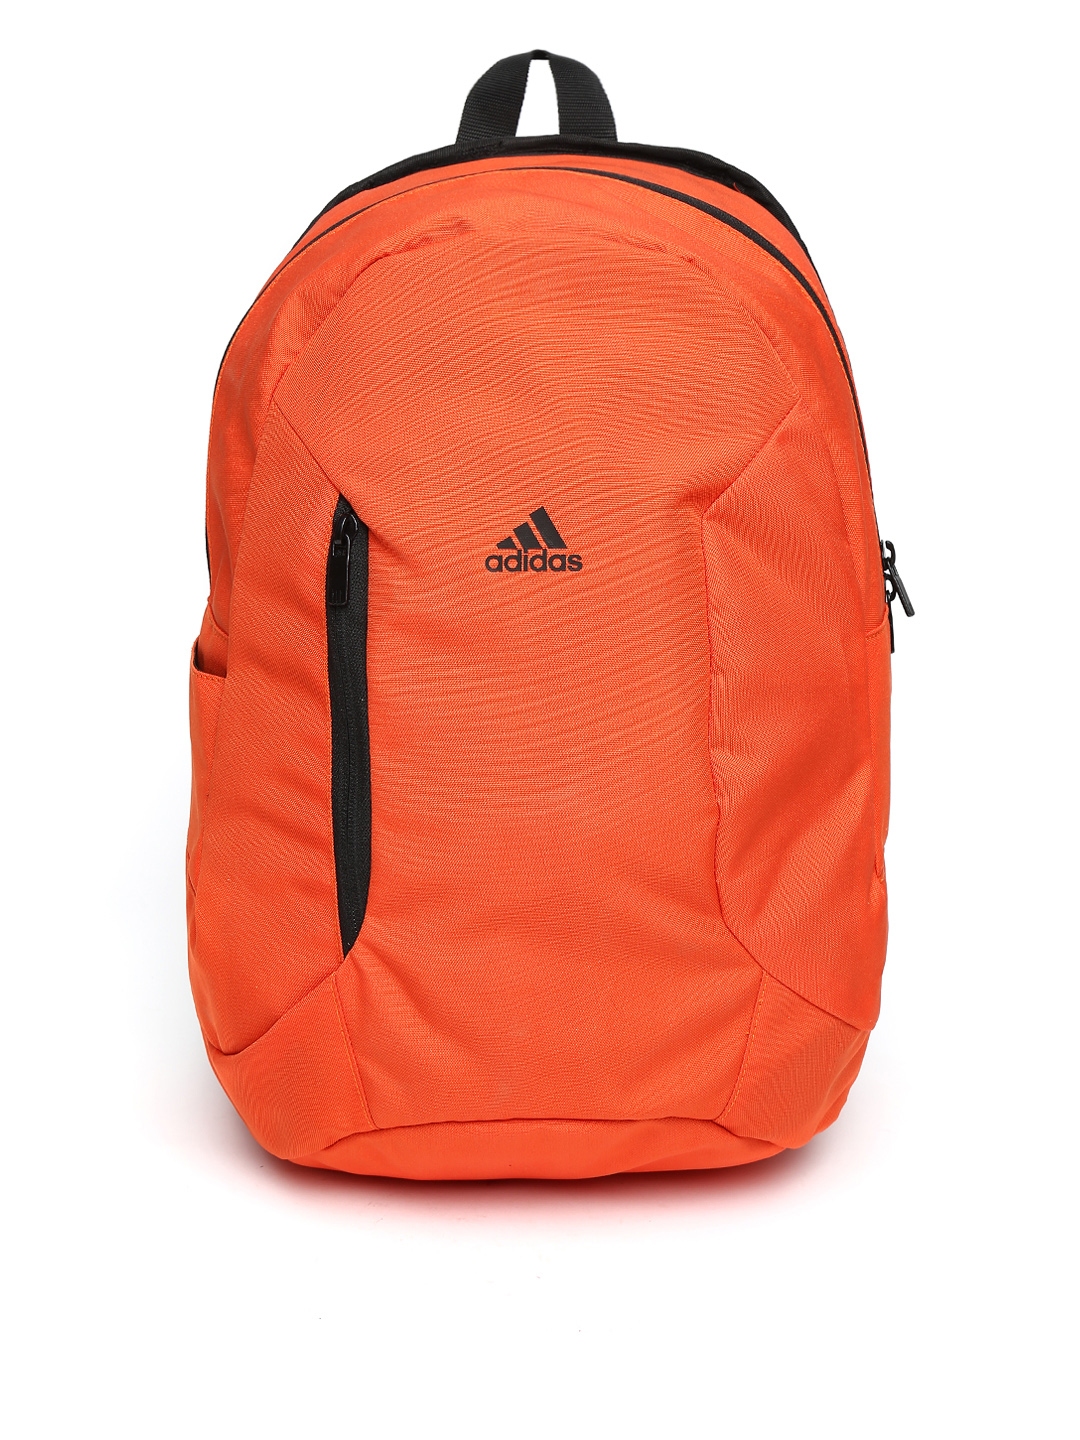 adidas backpack orange and black